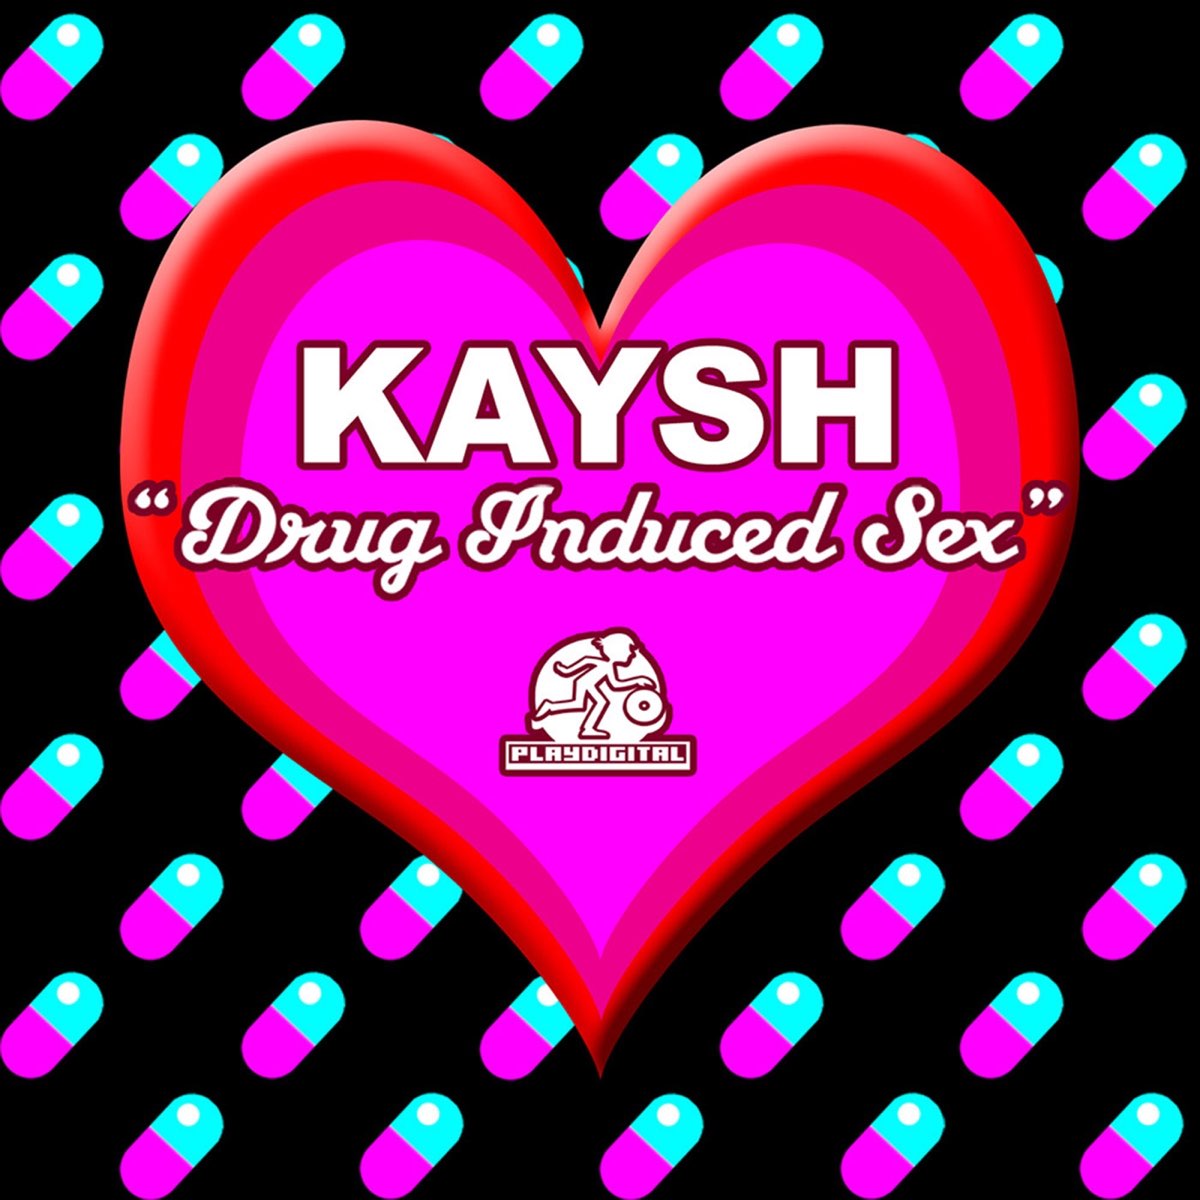 Drug Induced Sex - Single - Album by Kaysh